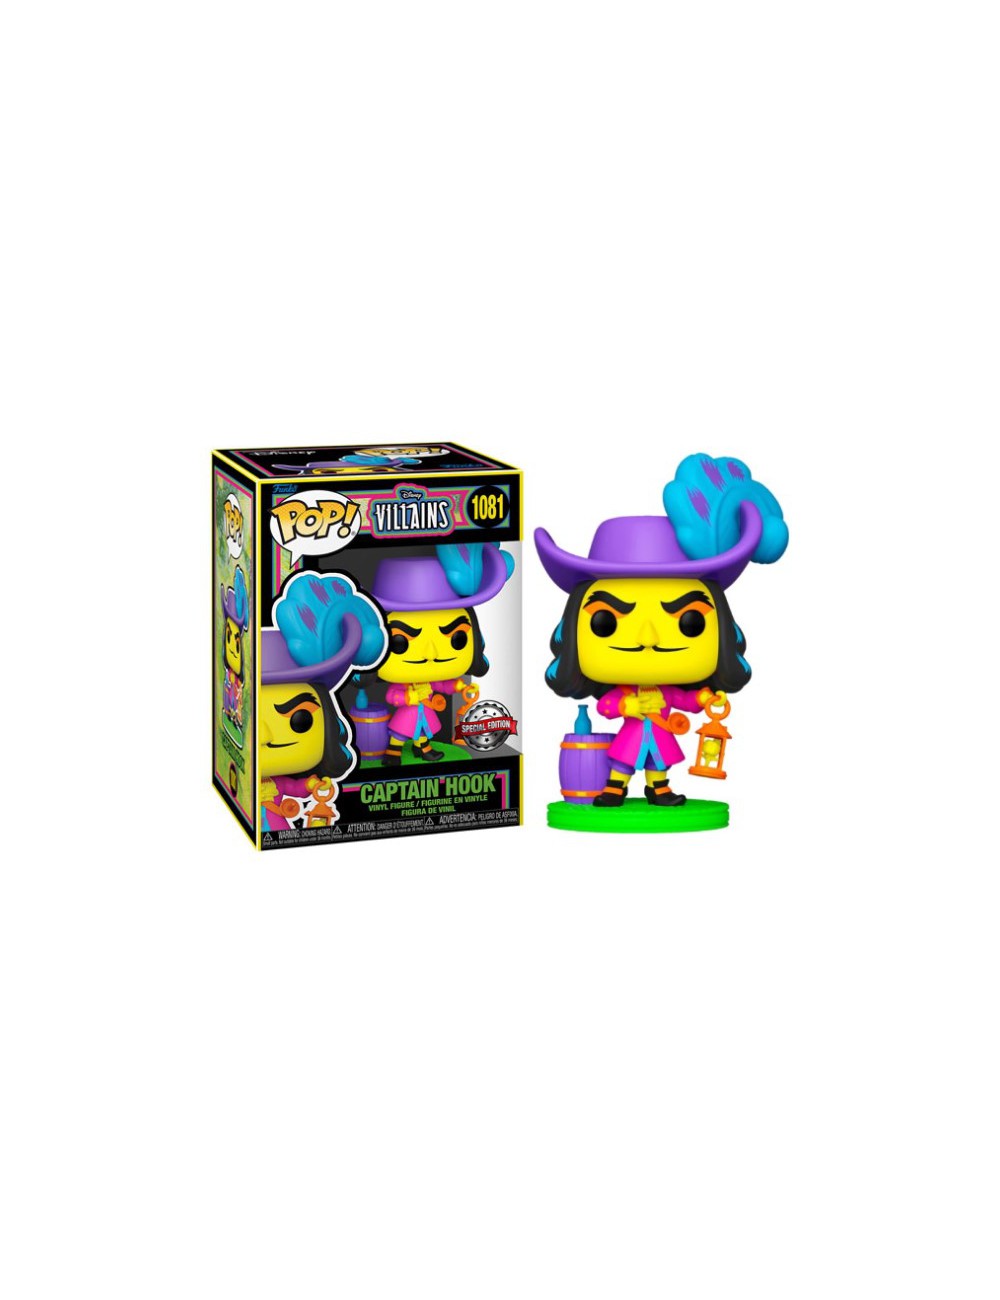 Funko POP! Disney Villains Captain Hook 1081